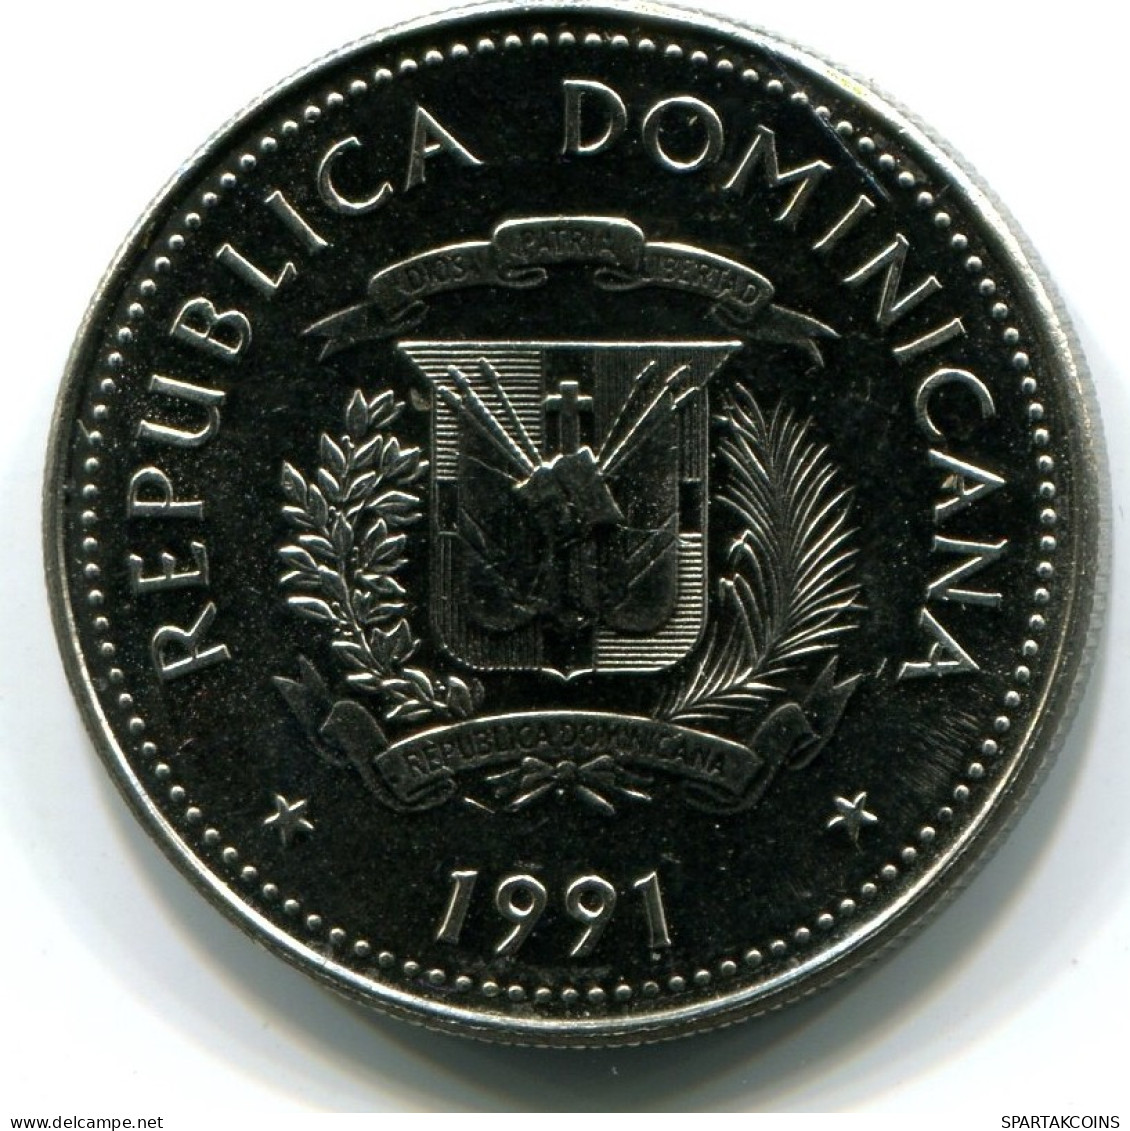 25 CENTAVOS 1991 REPUBLICA DOMINICANA UNC Coin #W11134.U.A - Dominicana